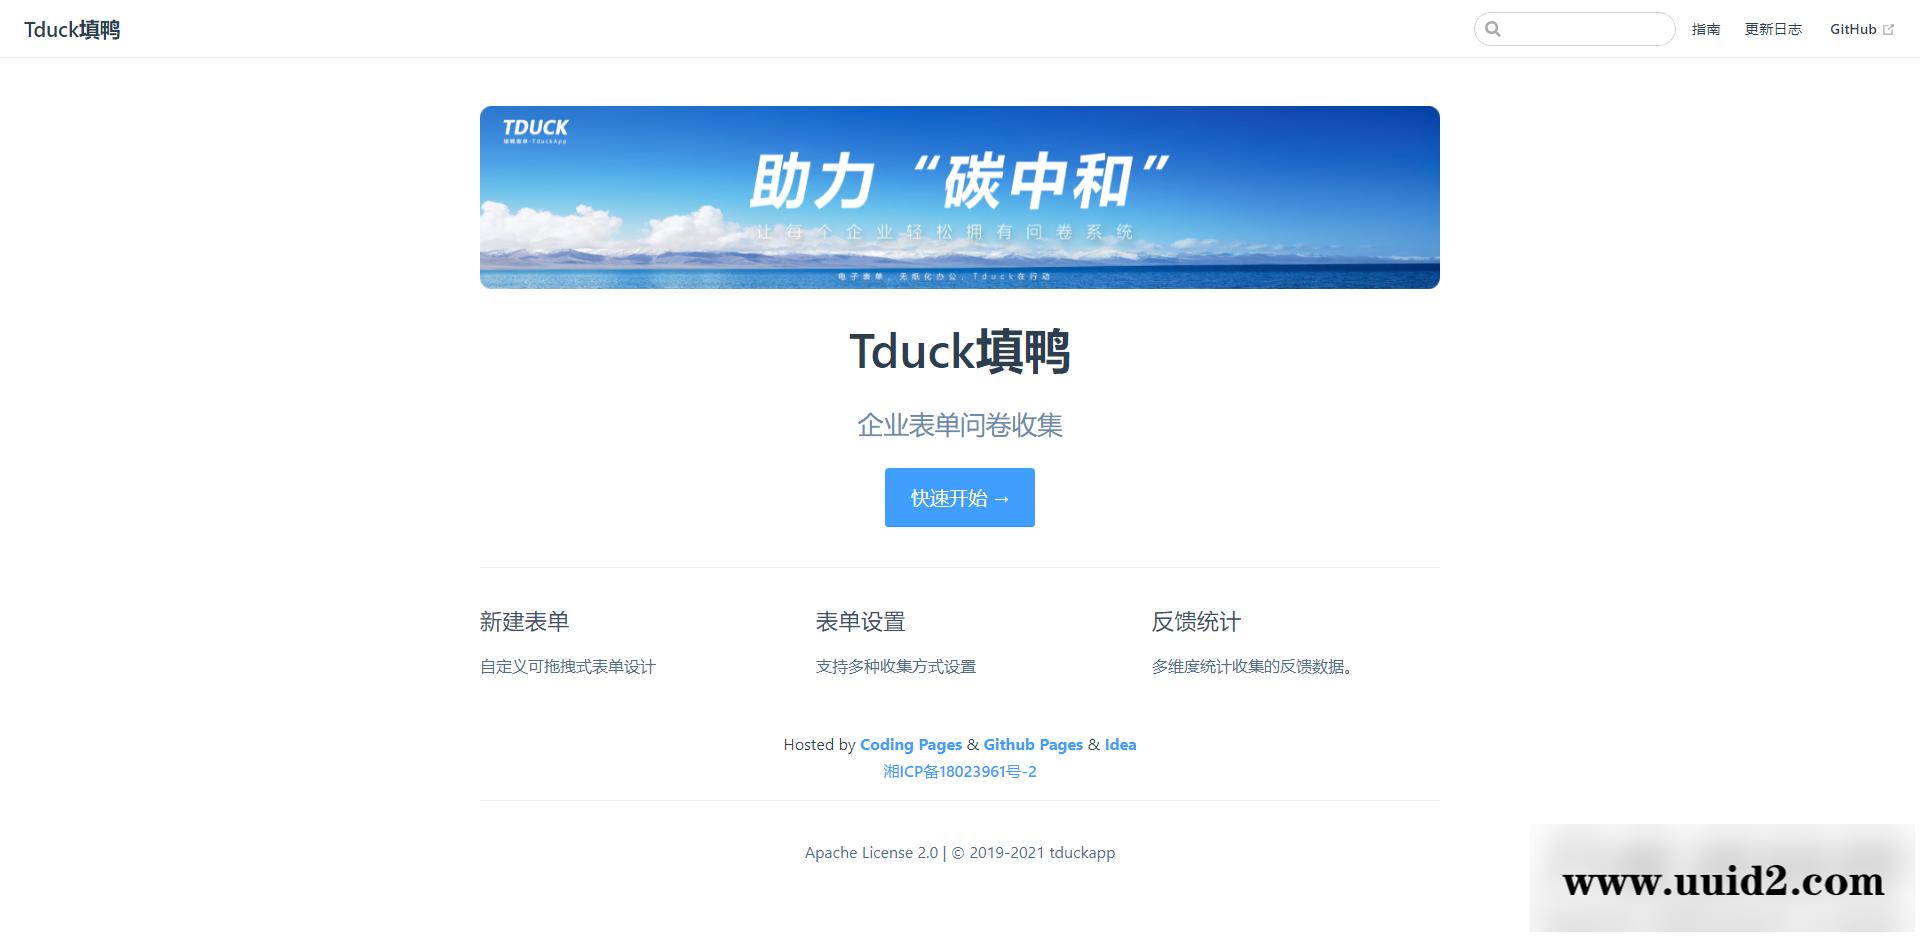 Tduck-填鸭收集器是一款开源的表单在线收集系统